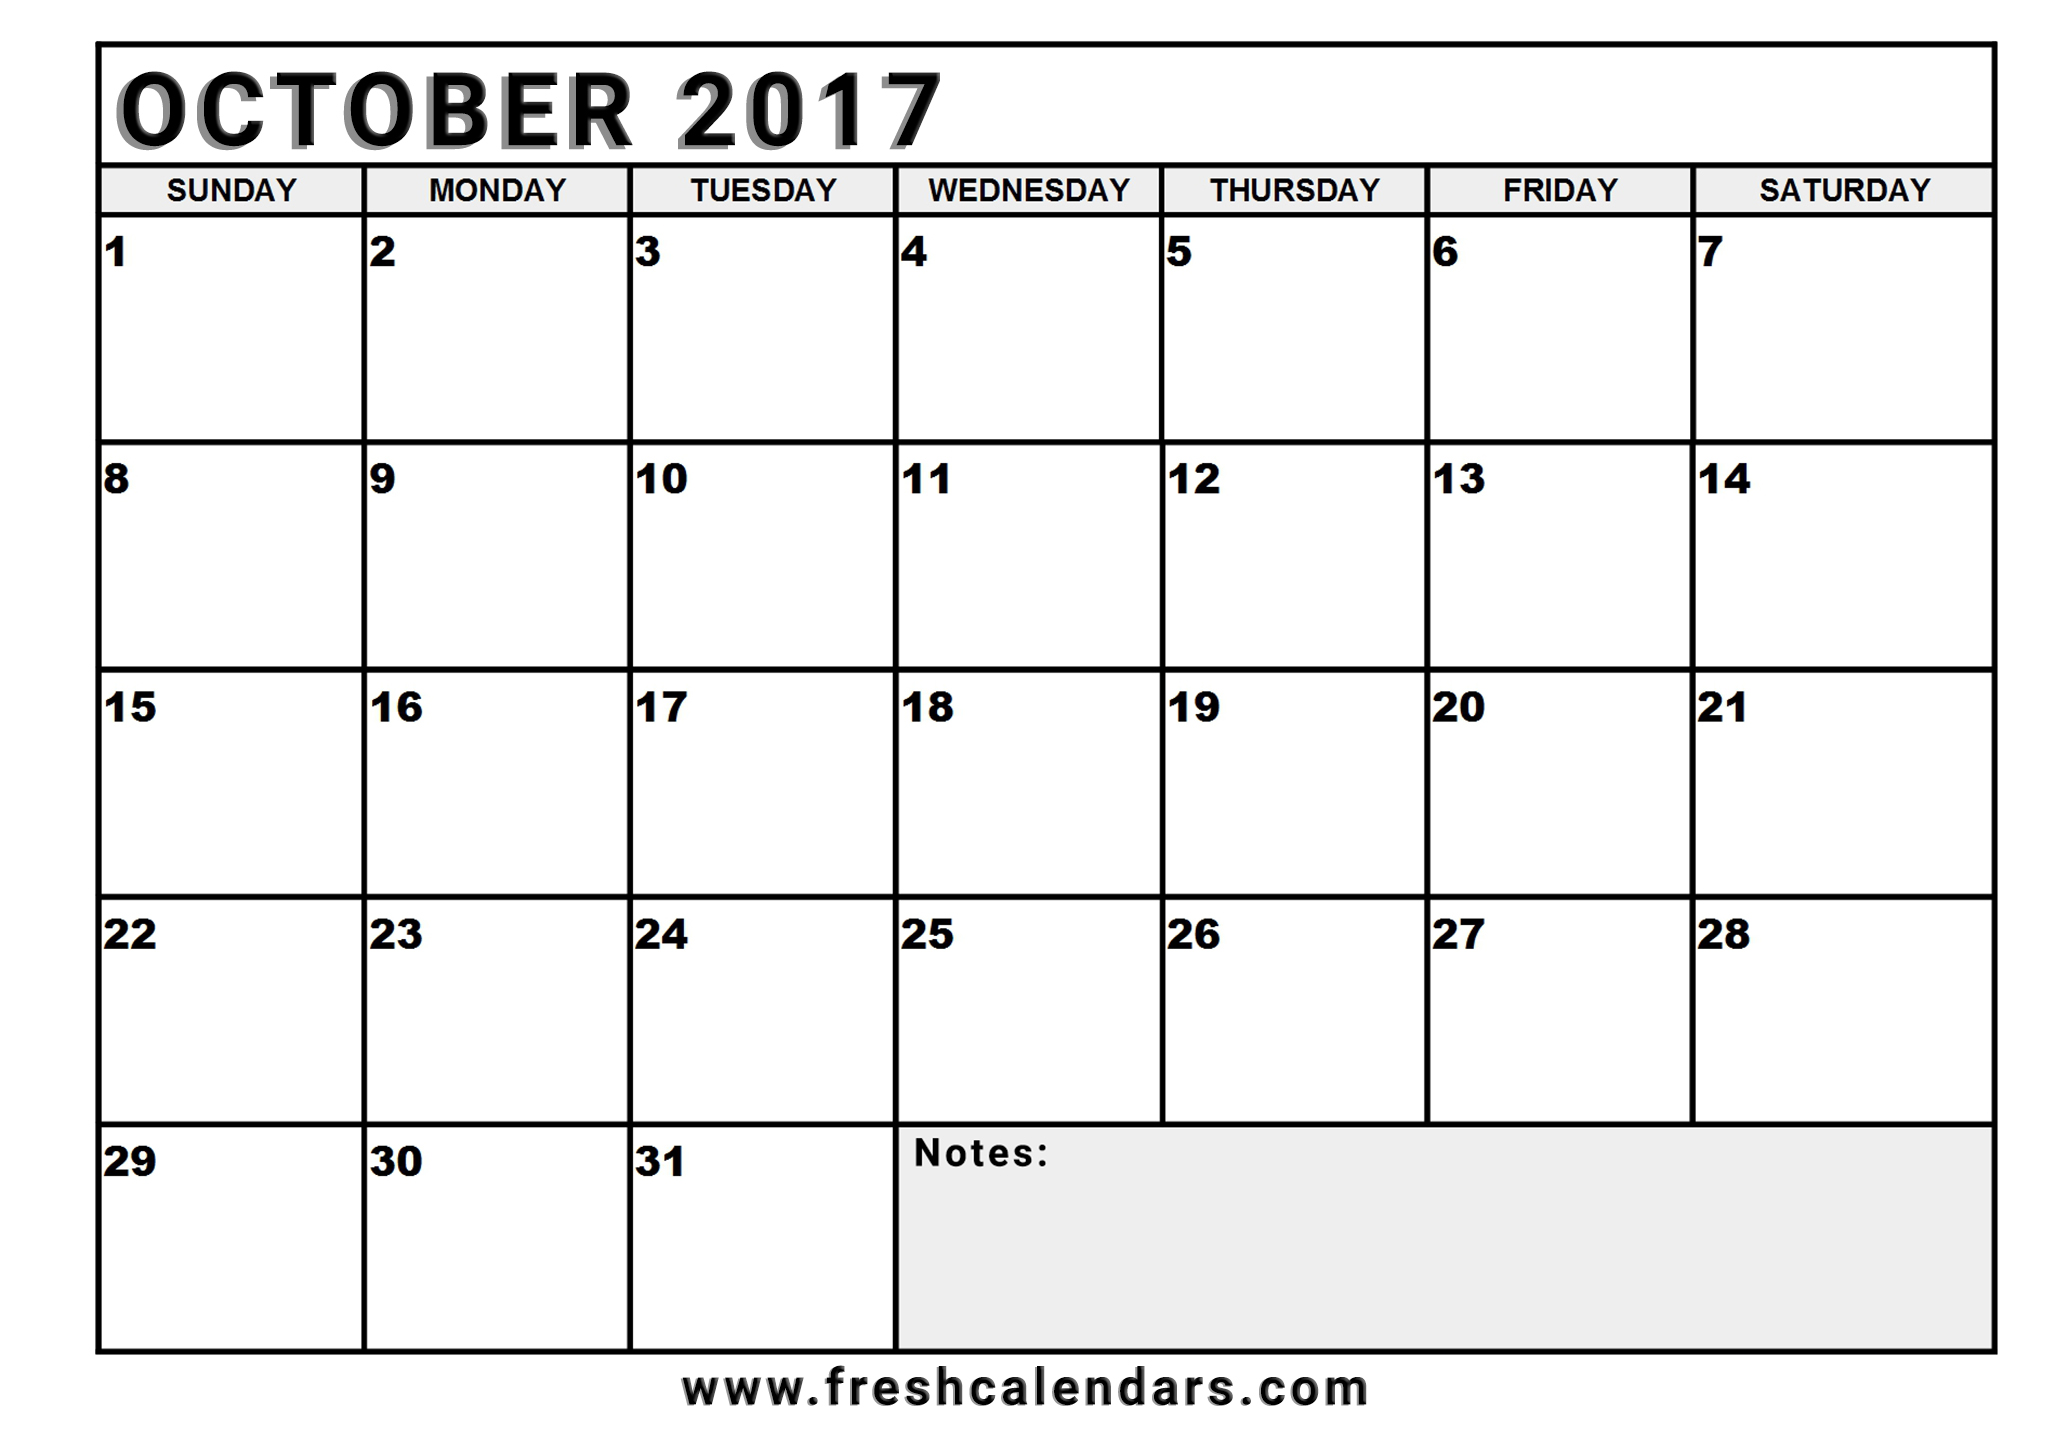 October 2017 Printable Free Calendar - www.freshcalendars.com